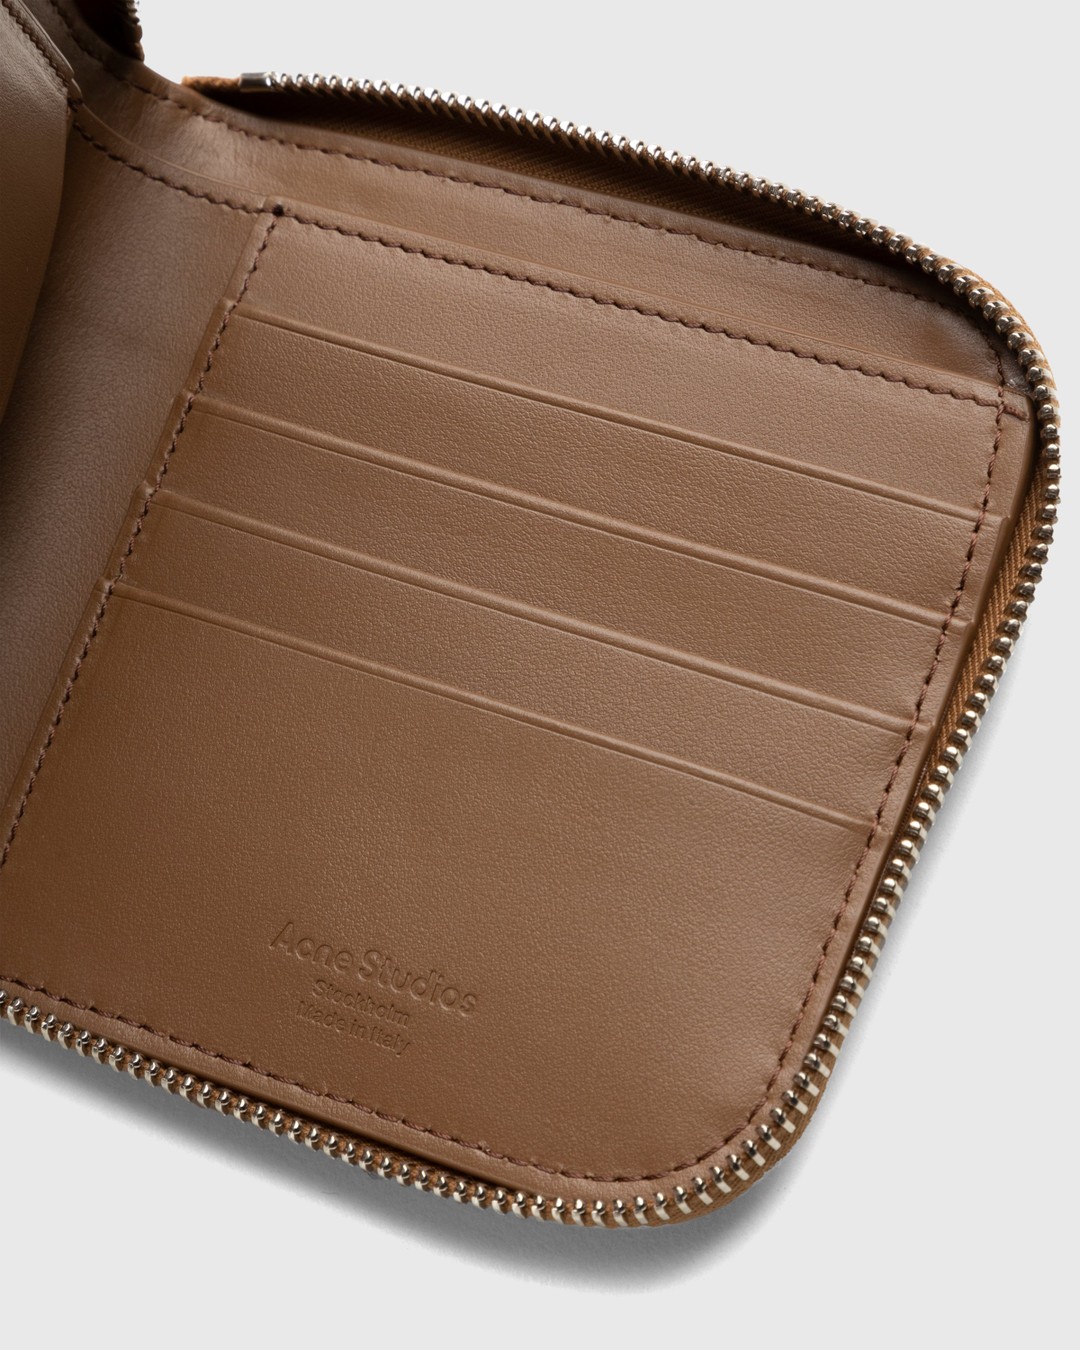 Acne Studios – Leather Zip Wallet Brown - Wallets - Brown - Image 5